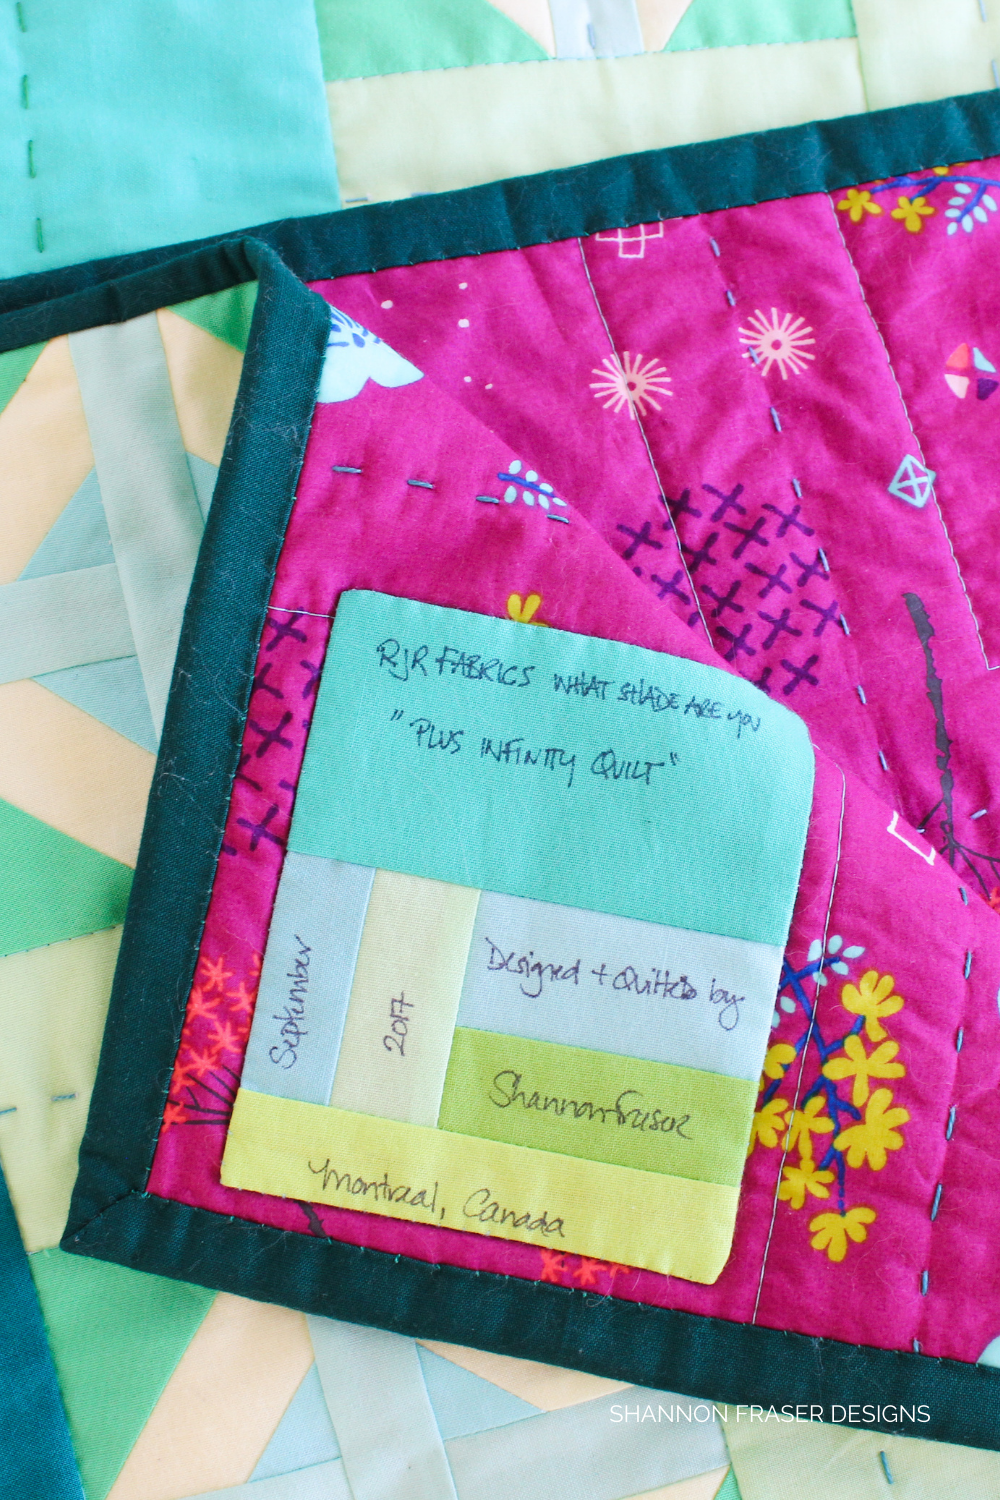 Custom modern improv quilt label handmade by Shannon Fraser Designs for the Plus Infinity Quilt | Quilt tutorial + free pattern by Shannon Fraser Designs #quiltlabel #modernquilt #quiltutorial